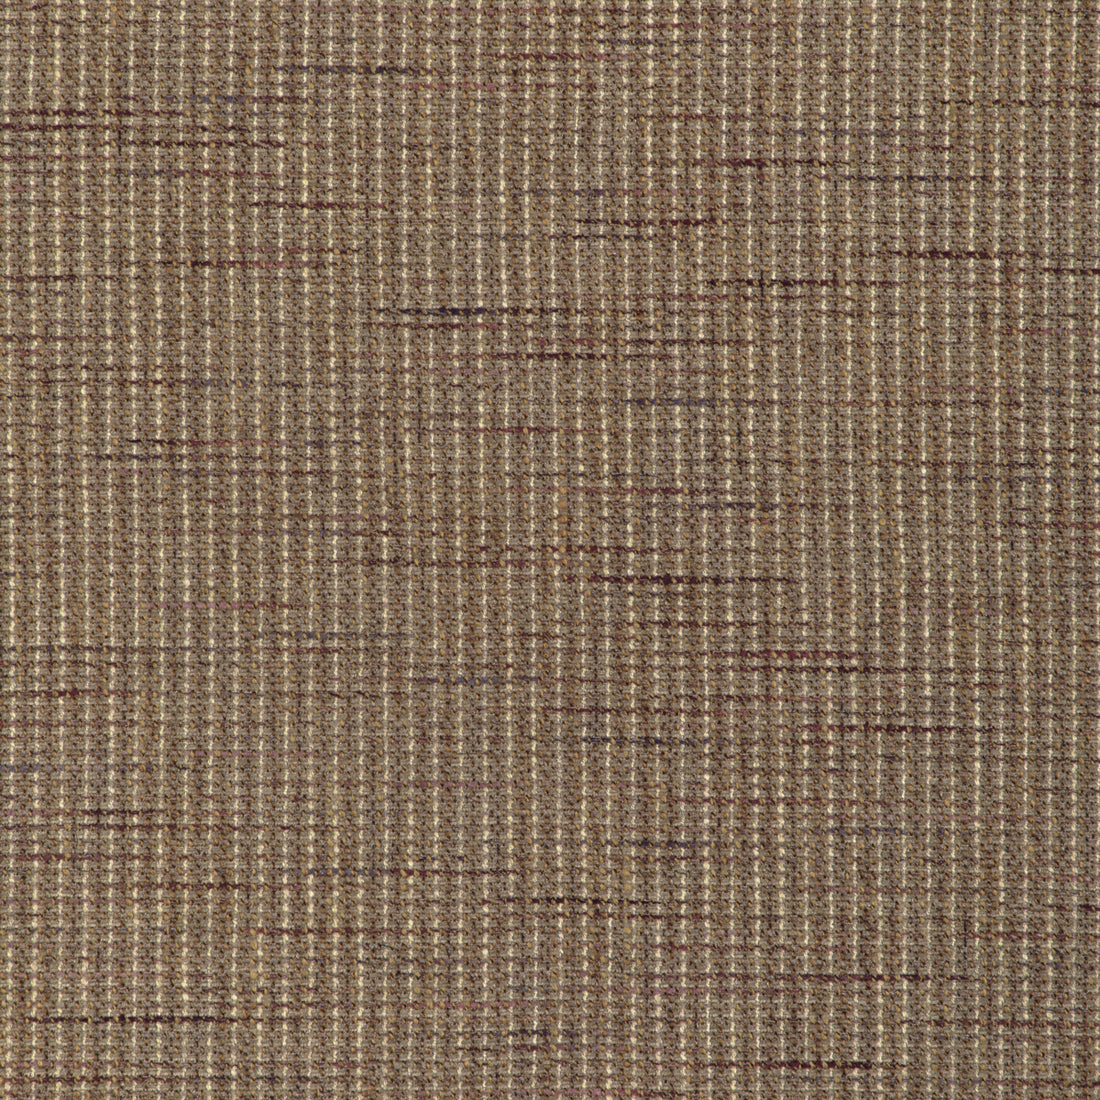 Kravet Smart fabric in 36669-624 color - pattern 36669.624.0 - by Kravet Smart in the Performance Kravetarmor collection